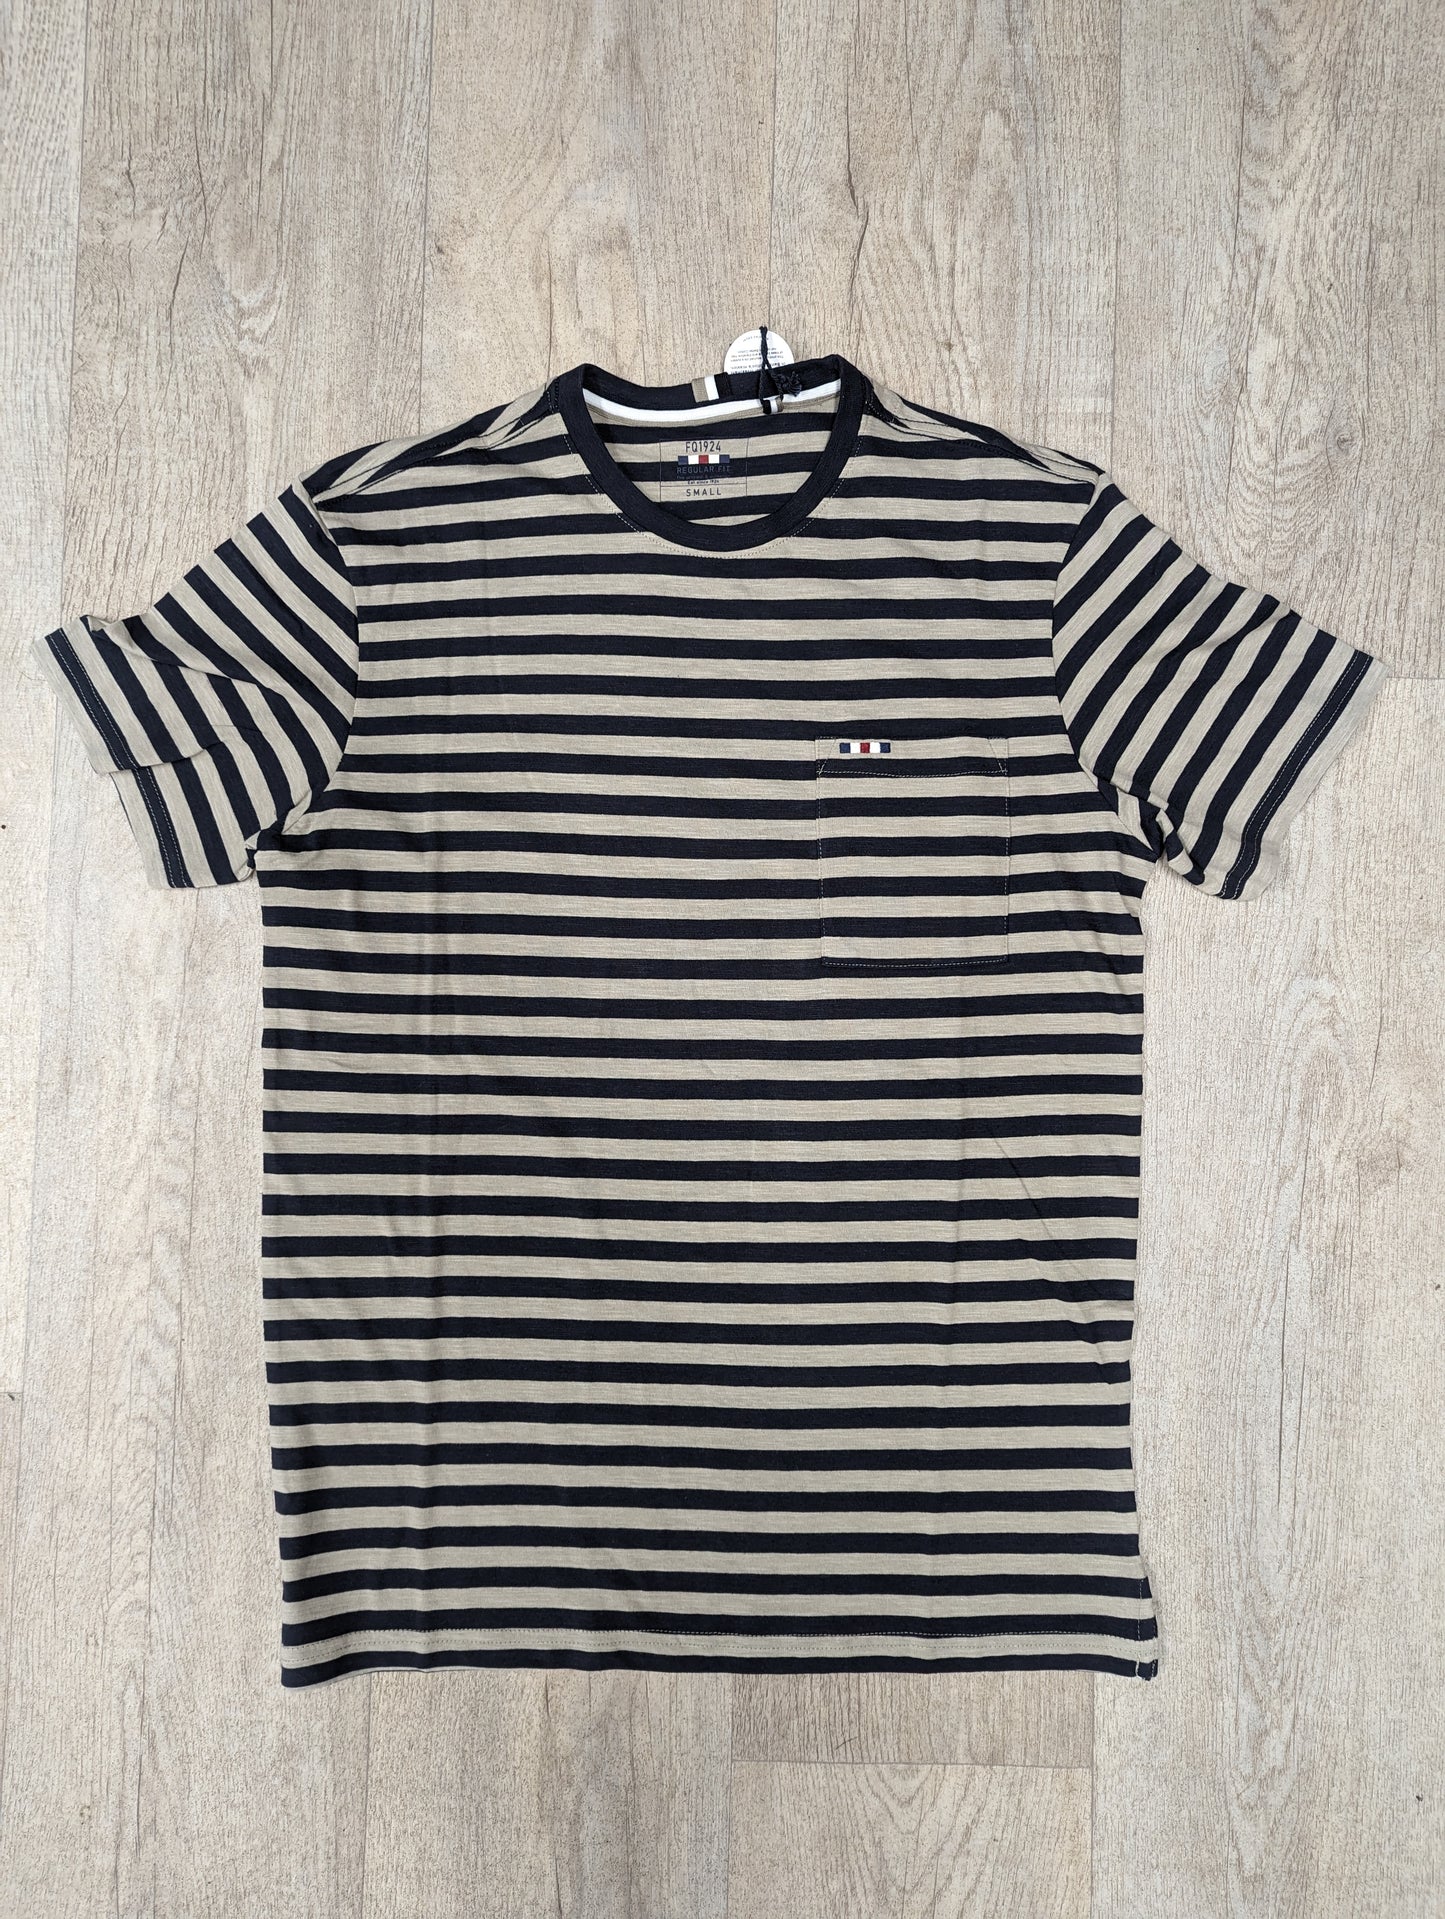 FQ1924 Striped Linen T-Shirts